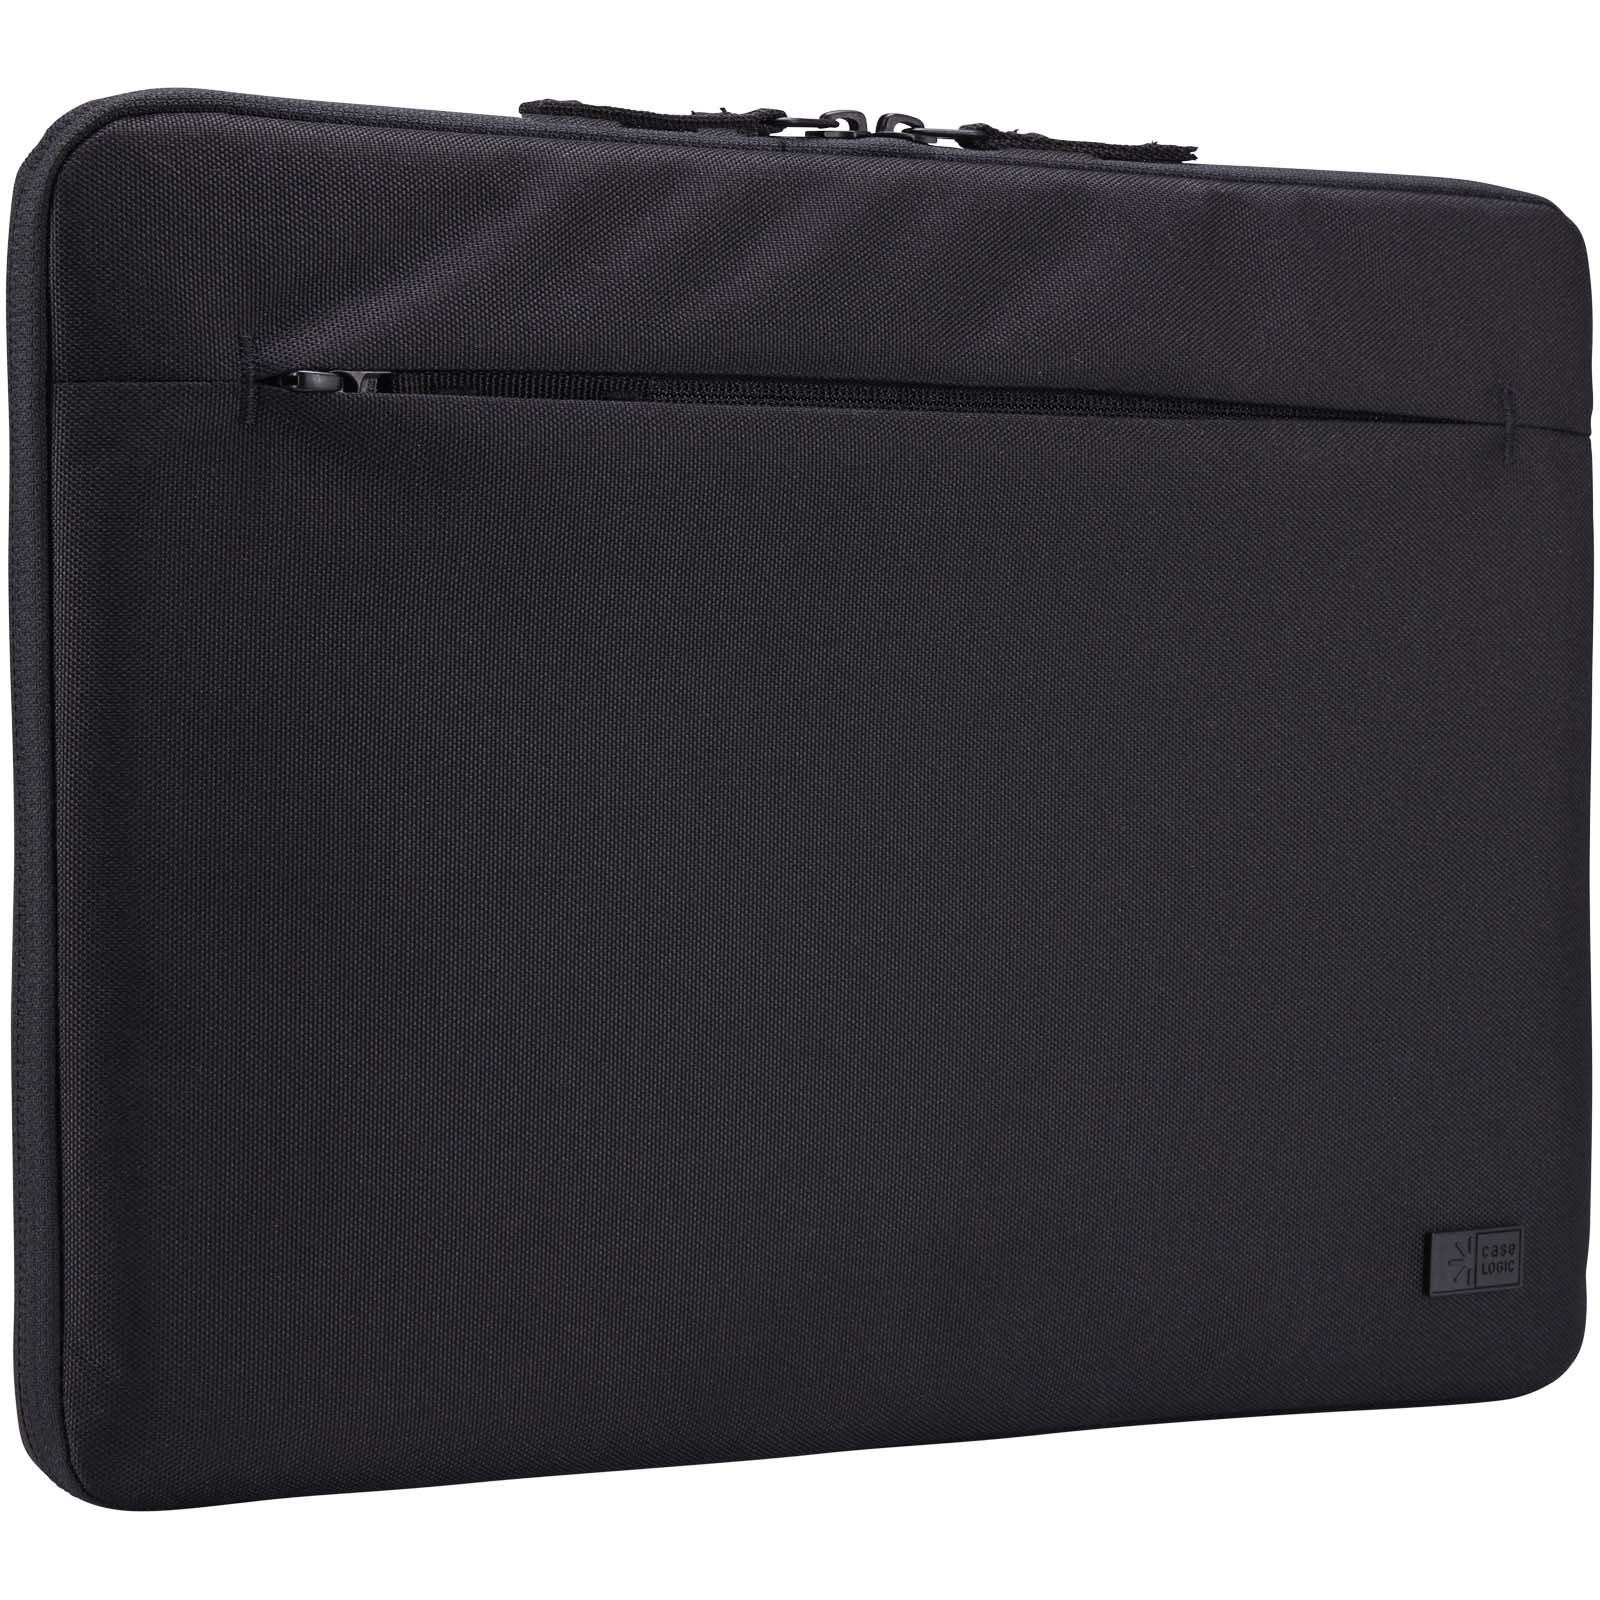 Laptop & Tablet bags - Case Logic Invigo 14